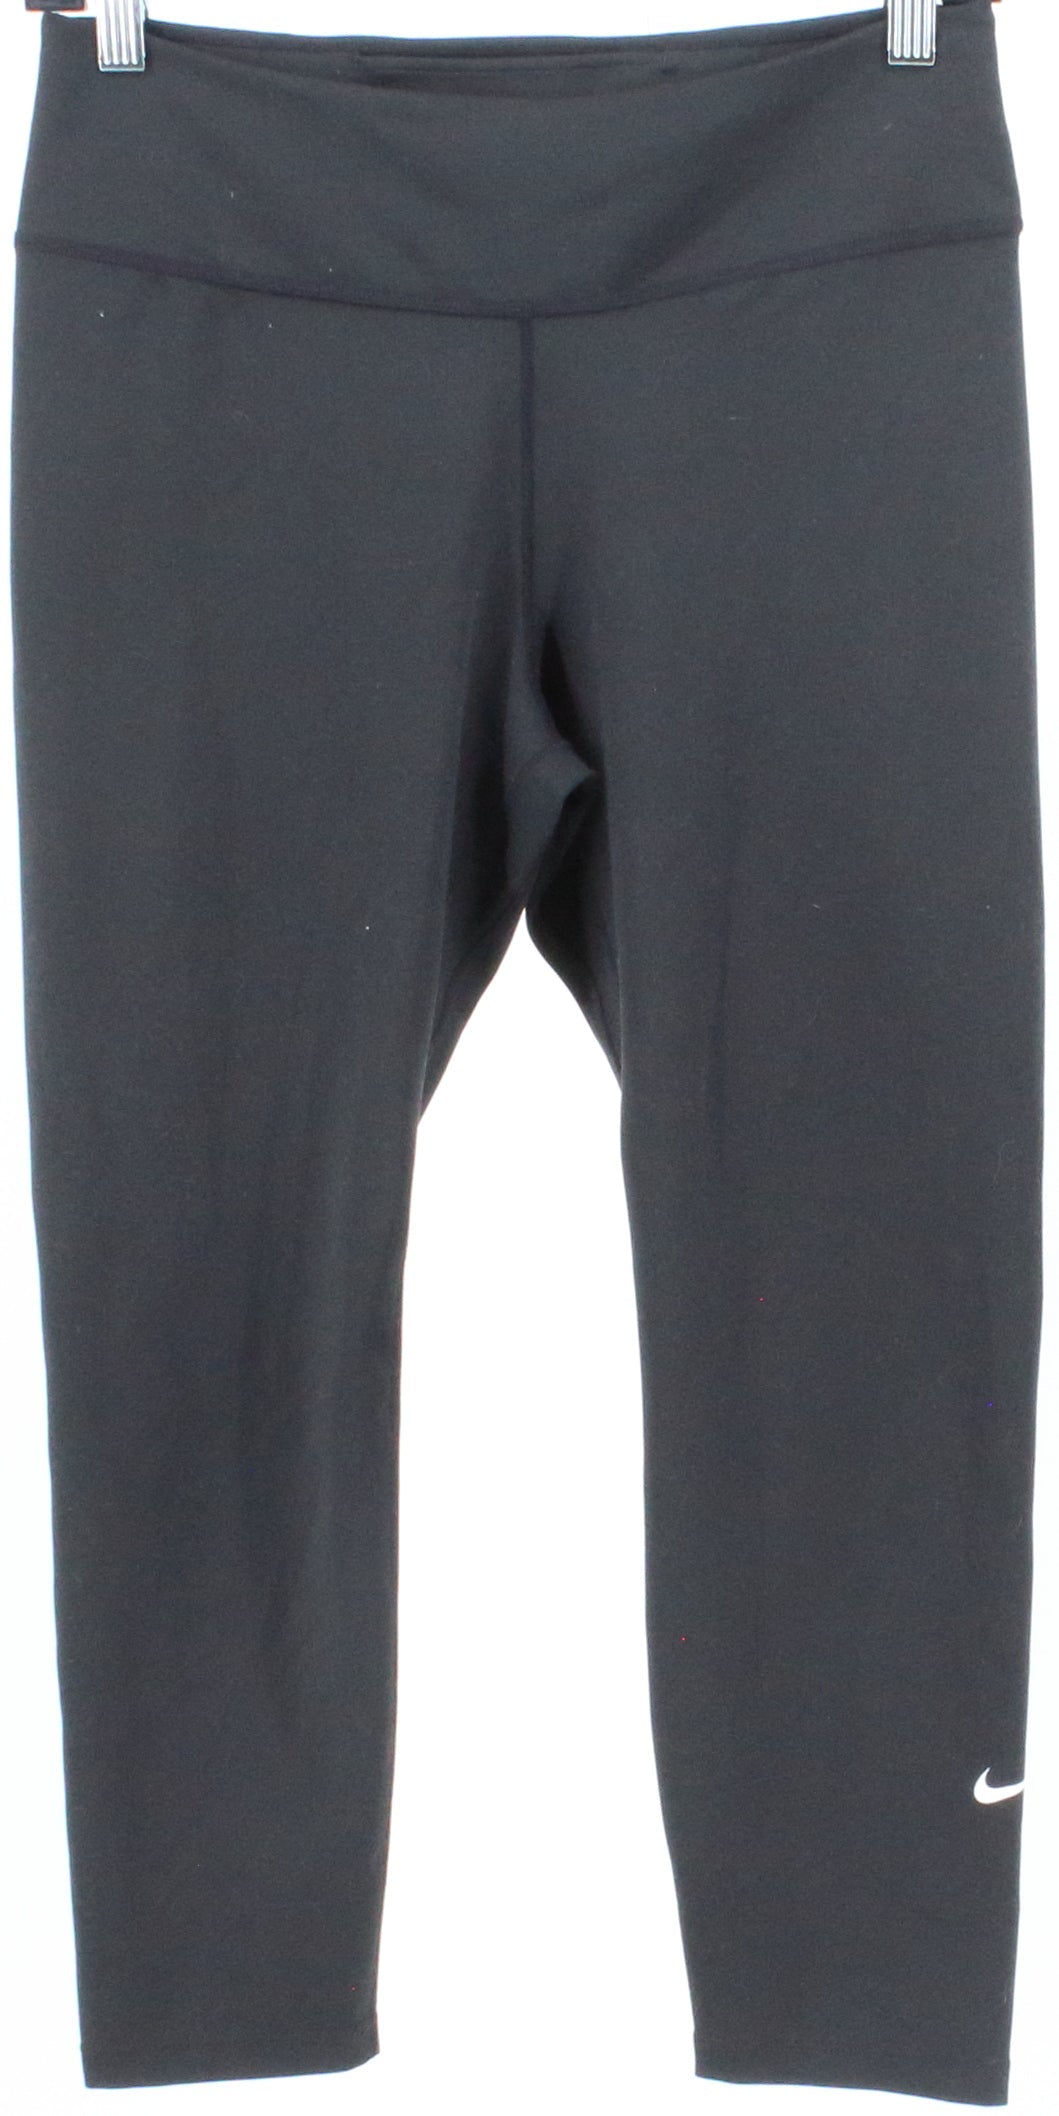 Nike Dri-Fit Black Legging Pants With White Lower Silk Logo